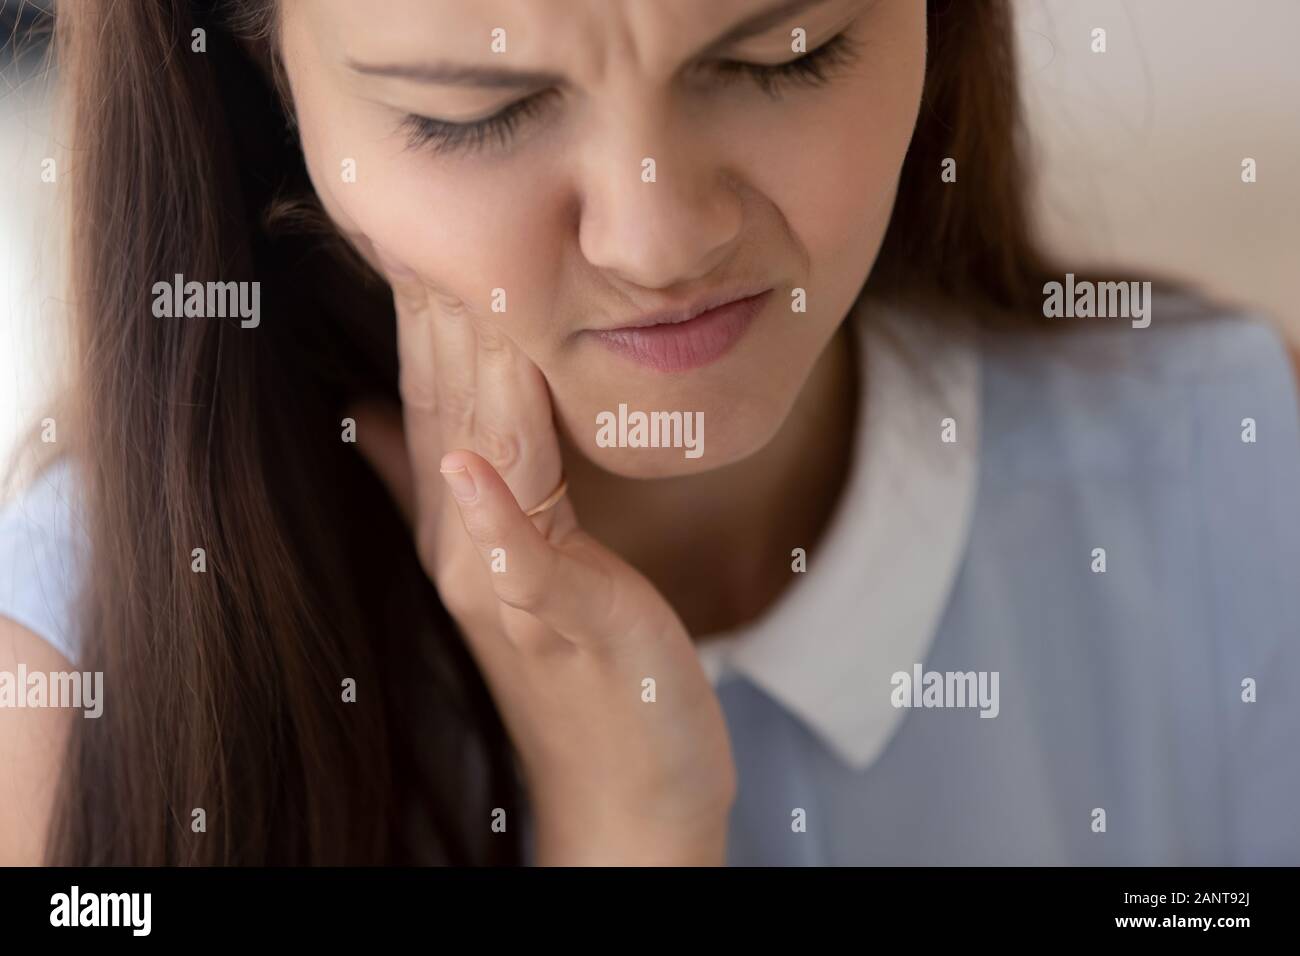 Frau leidet unter starken Zahn ache Detailansicht frowny face Stockfoto